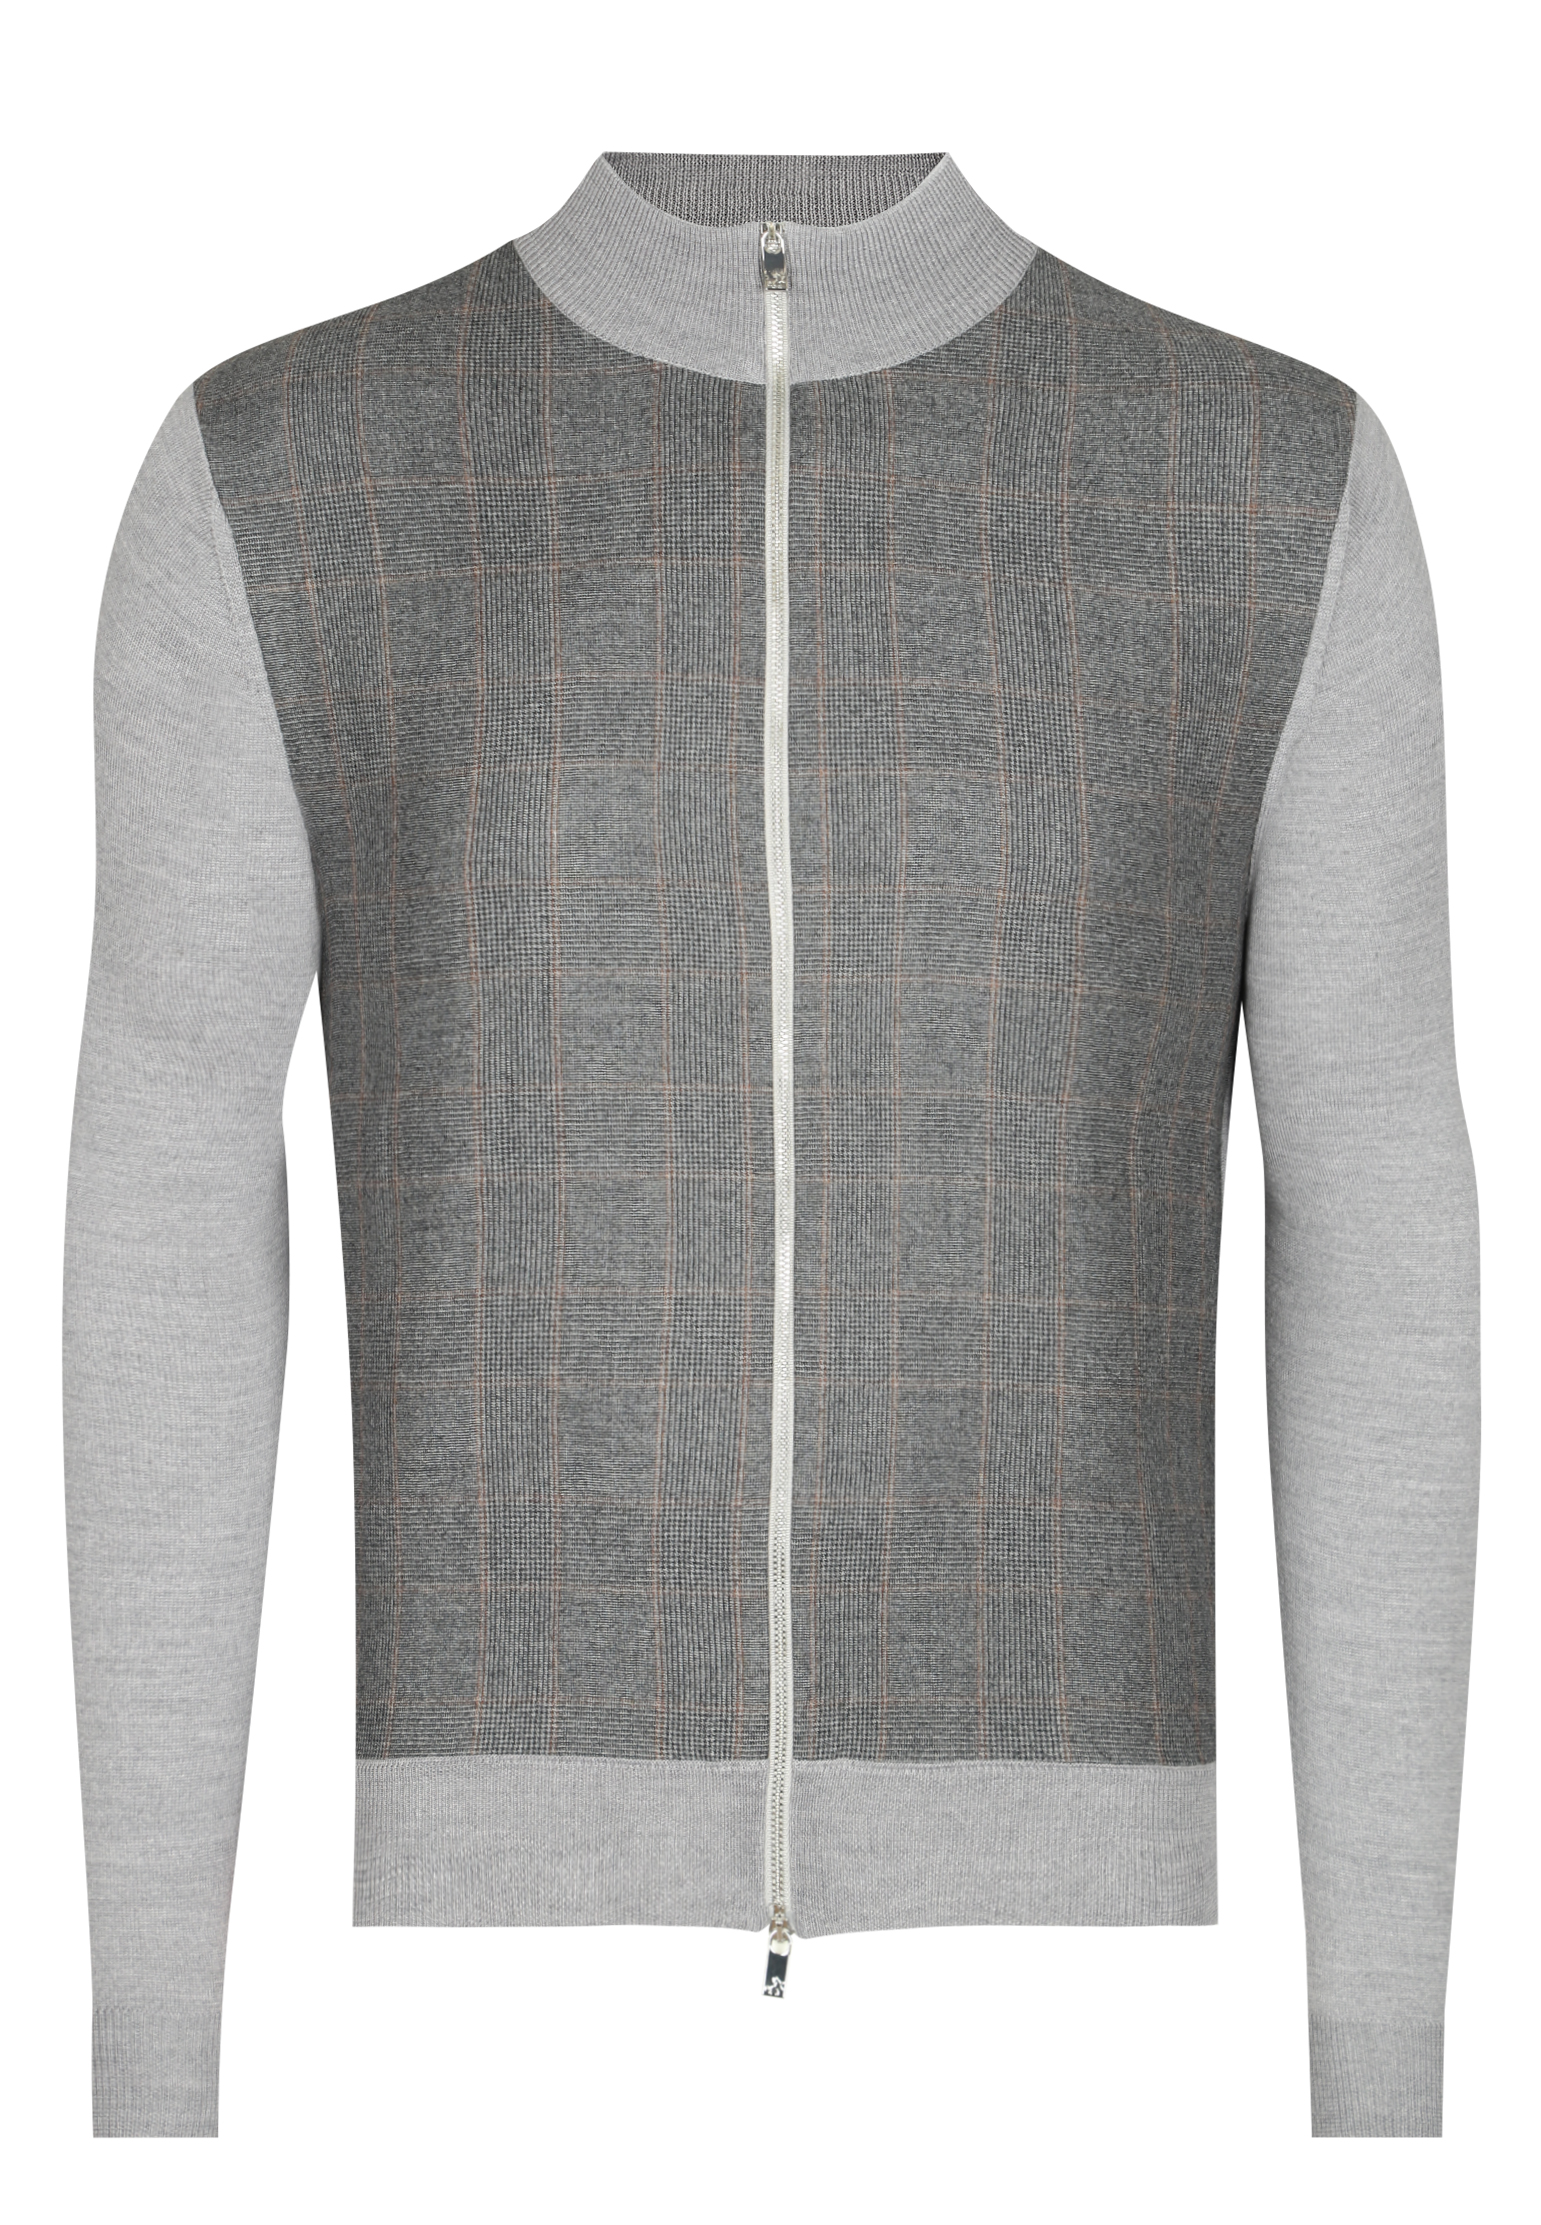 мужской свитер tombolini, серый